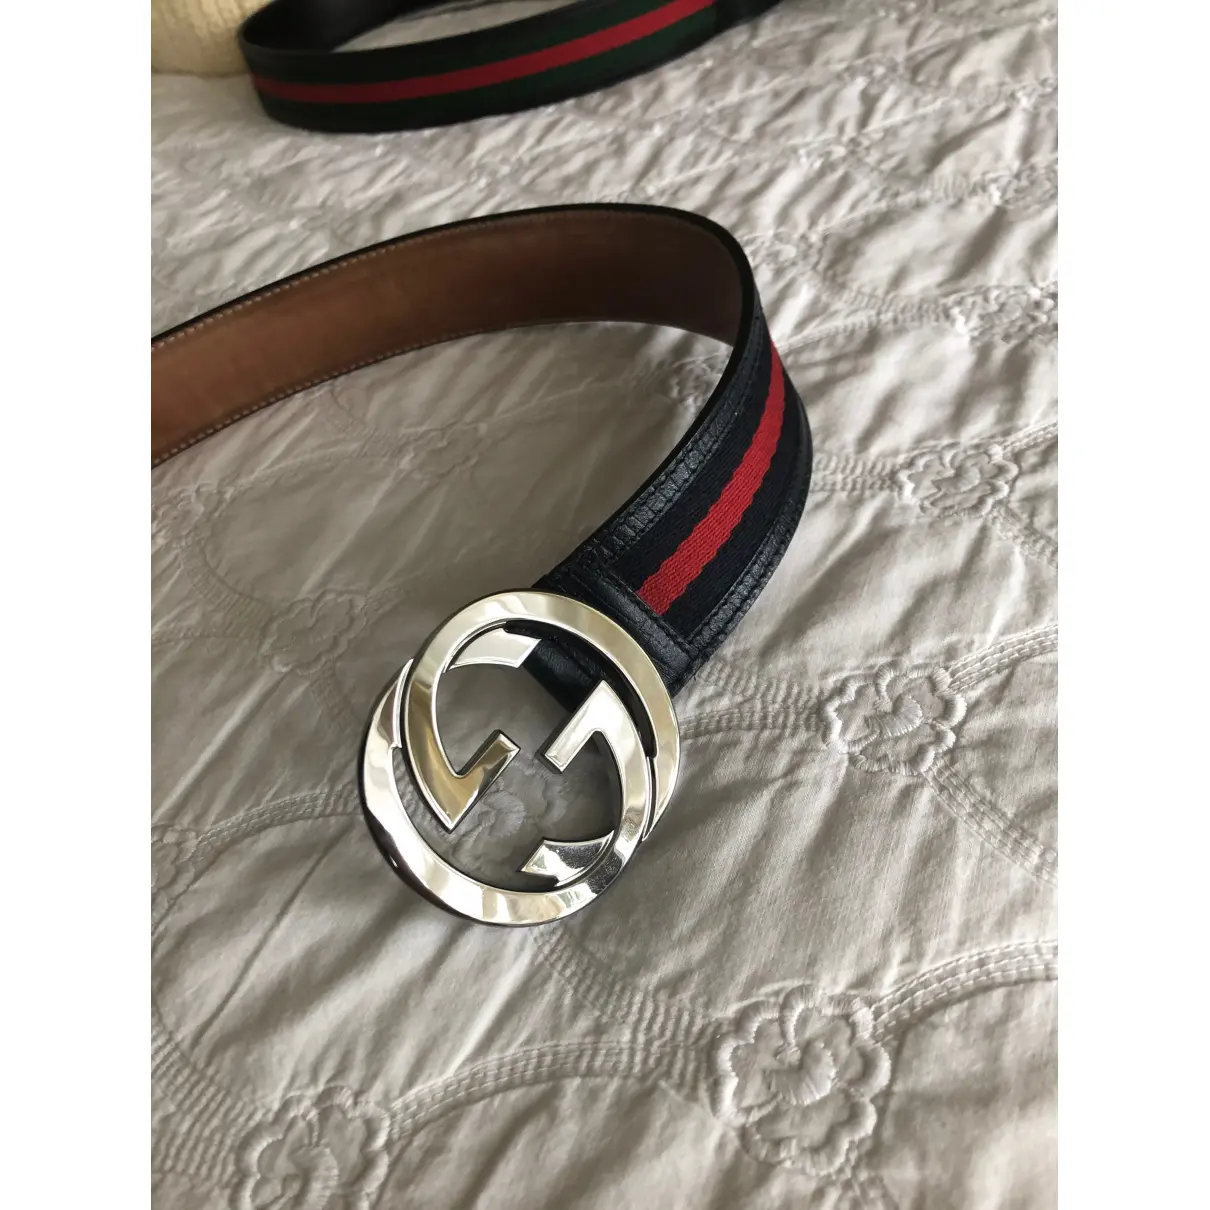 Buy Gucci Interlocking Buckle leather belt online